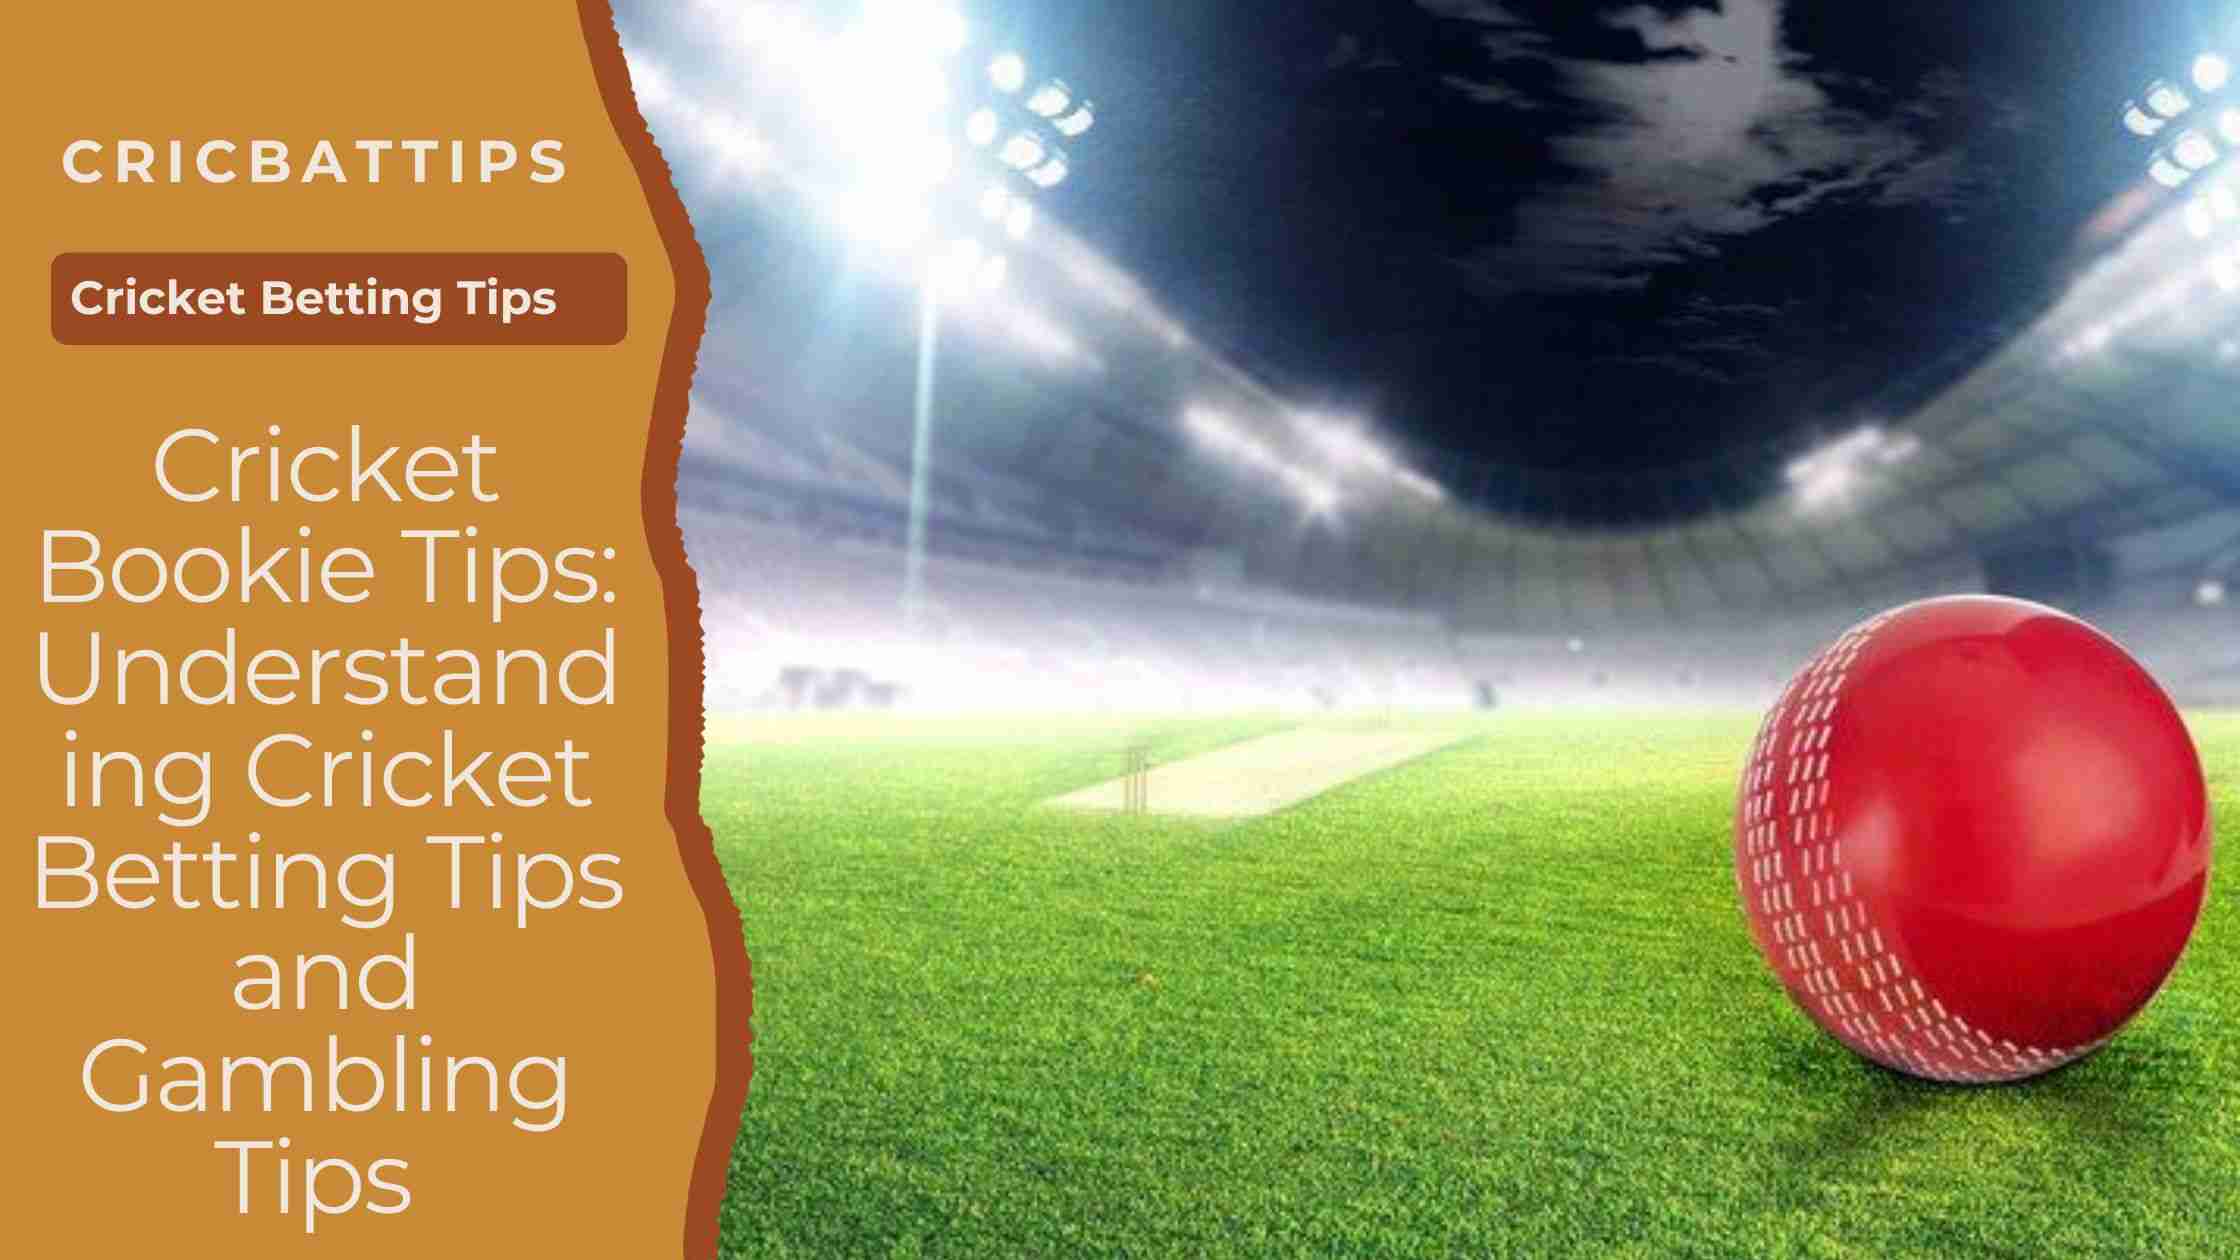 Cricket Bookie Tips Understanding Cricket Betting Tips and Gambling Tips 